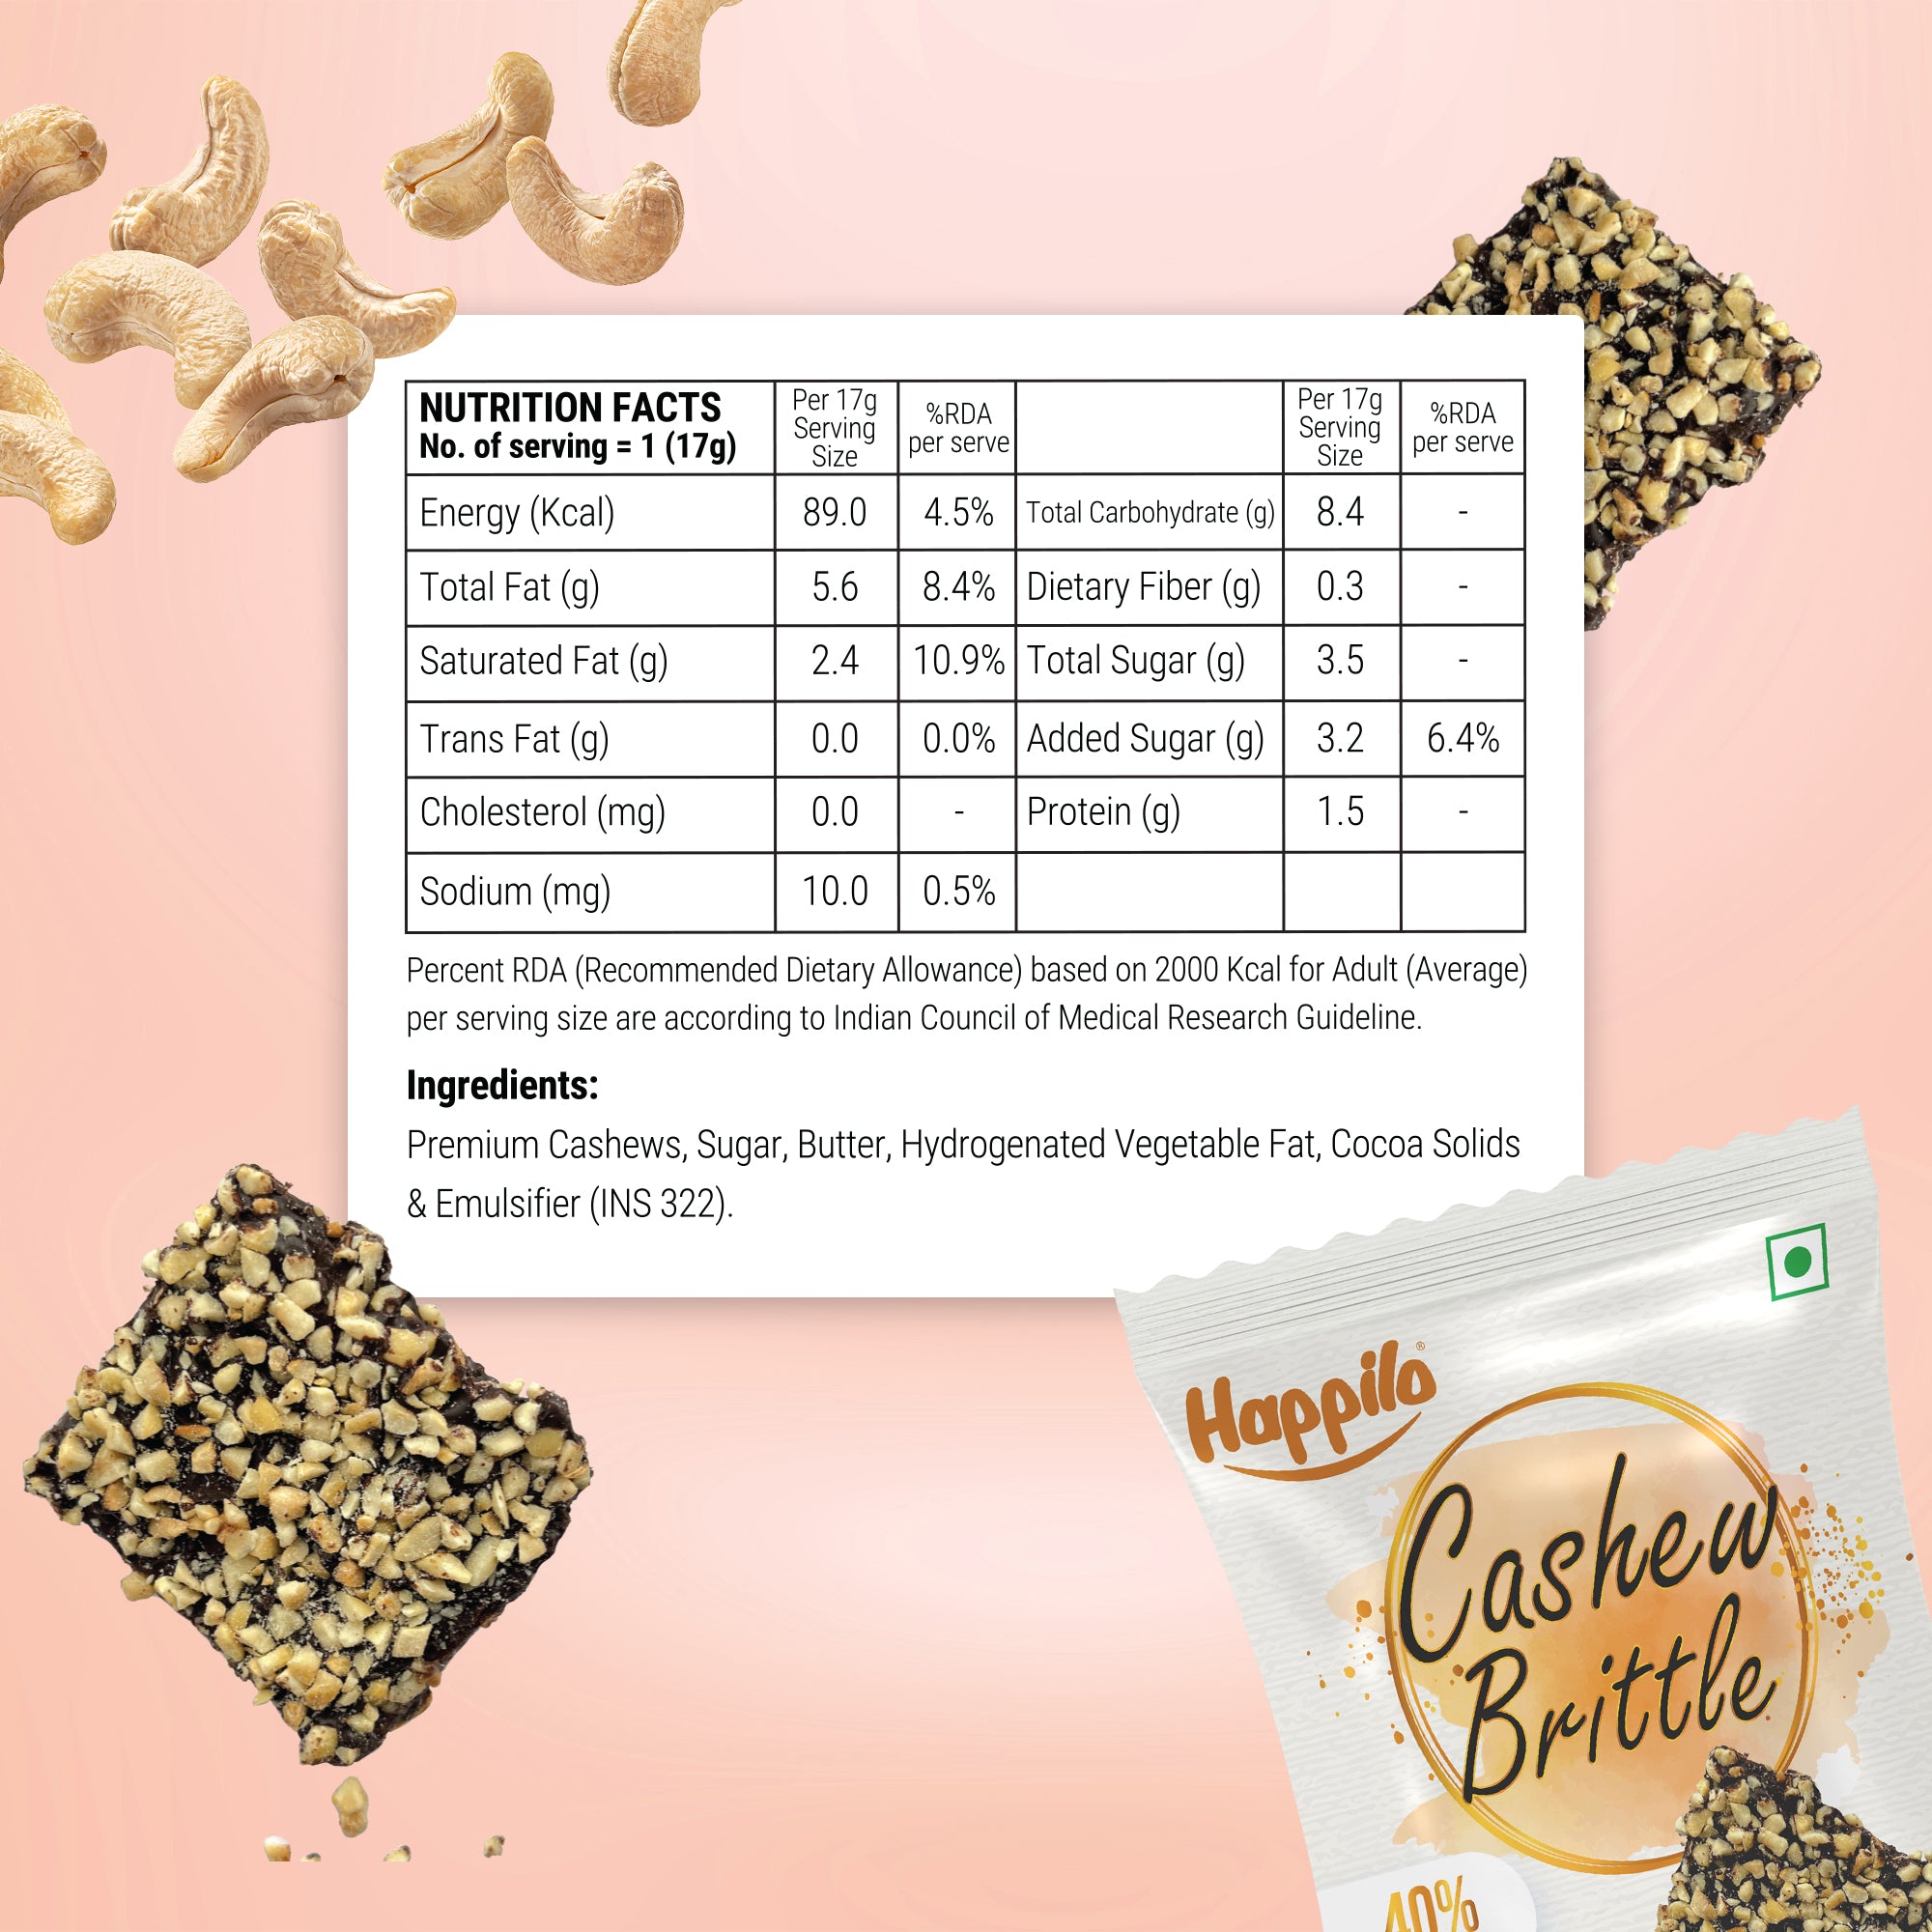 Happilo Premium Cashews Brittle Gift Box 204g (17gX12)